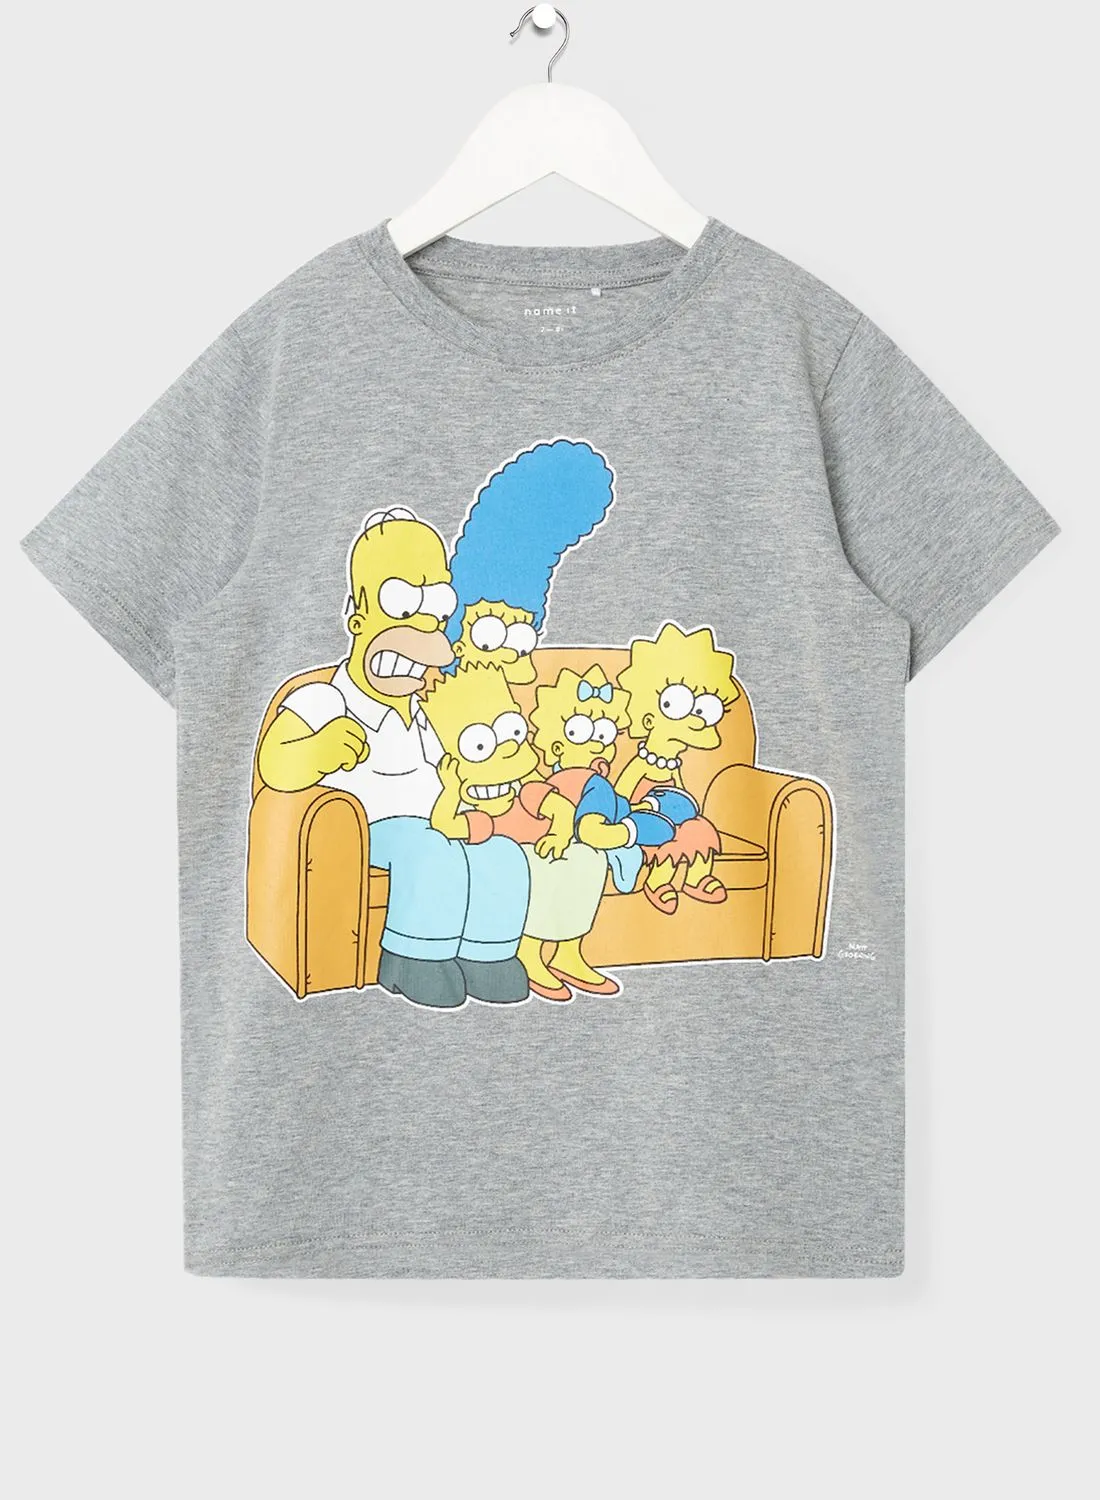 NAME IT Kids Simpsons T-Shirt